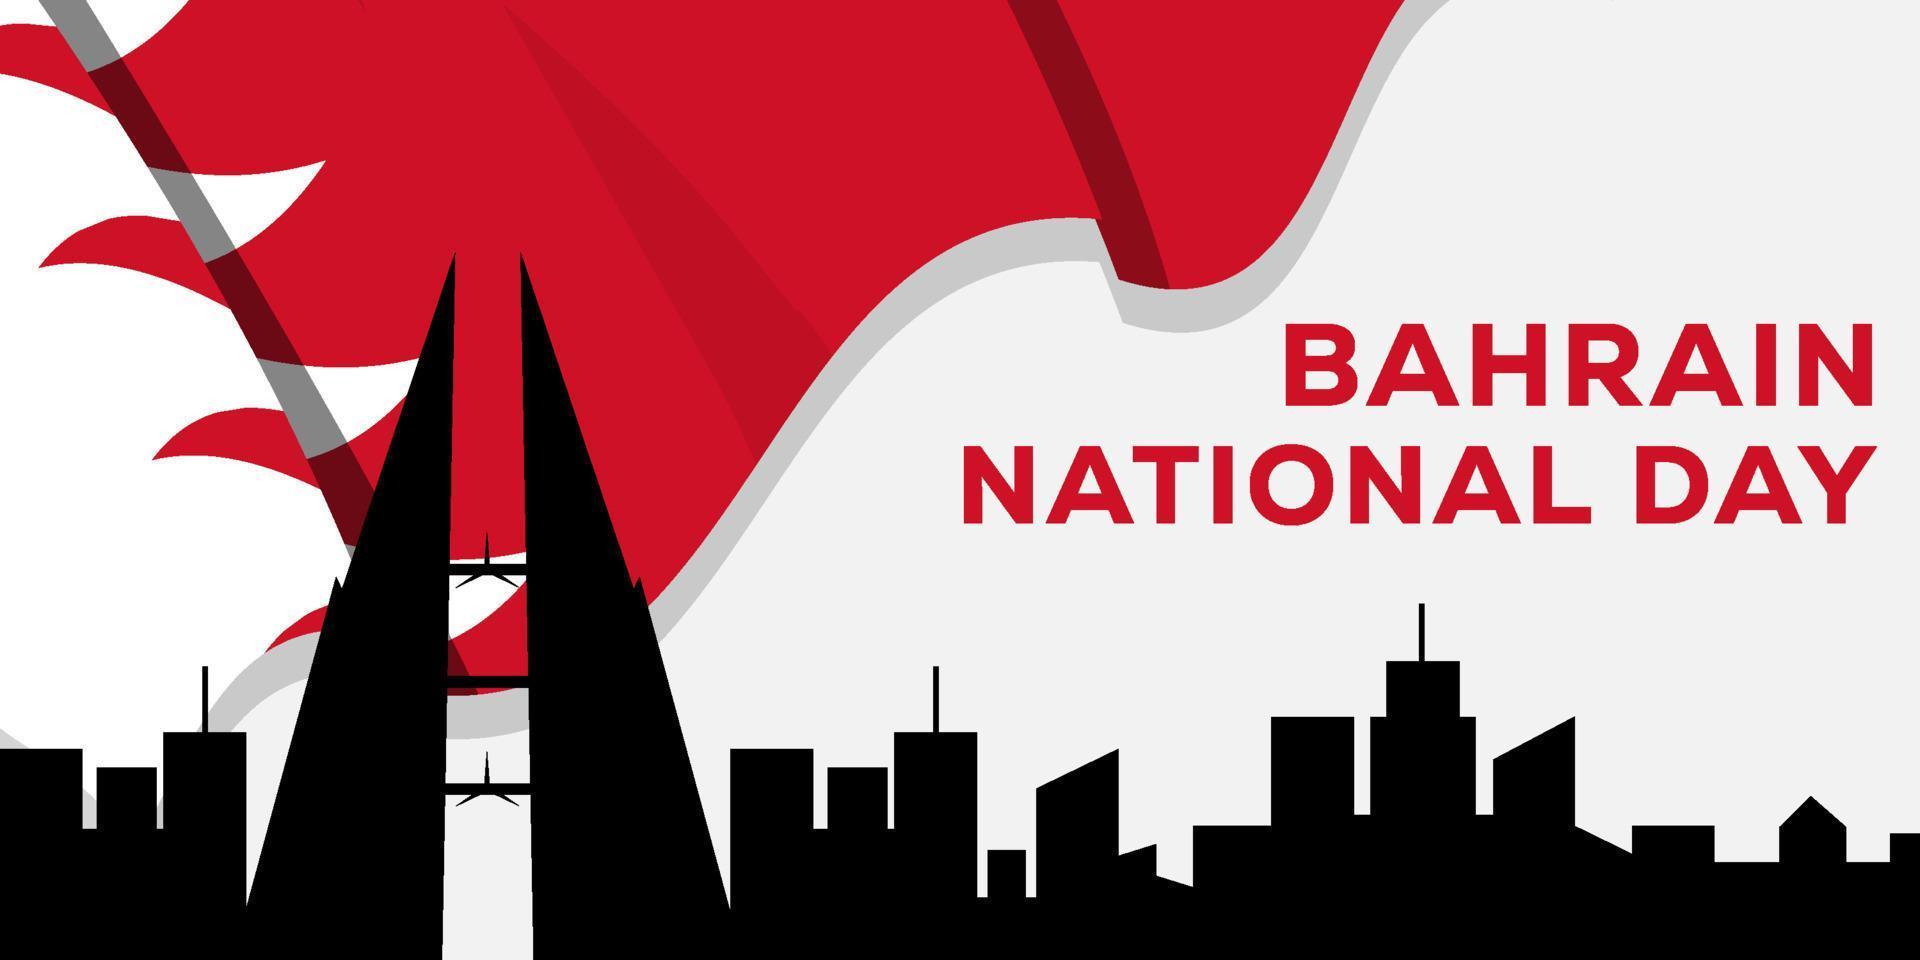 Bahrein nationaal dag horizontaal banier illustratie vector